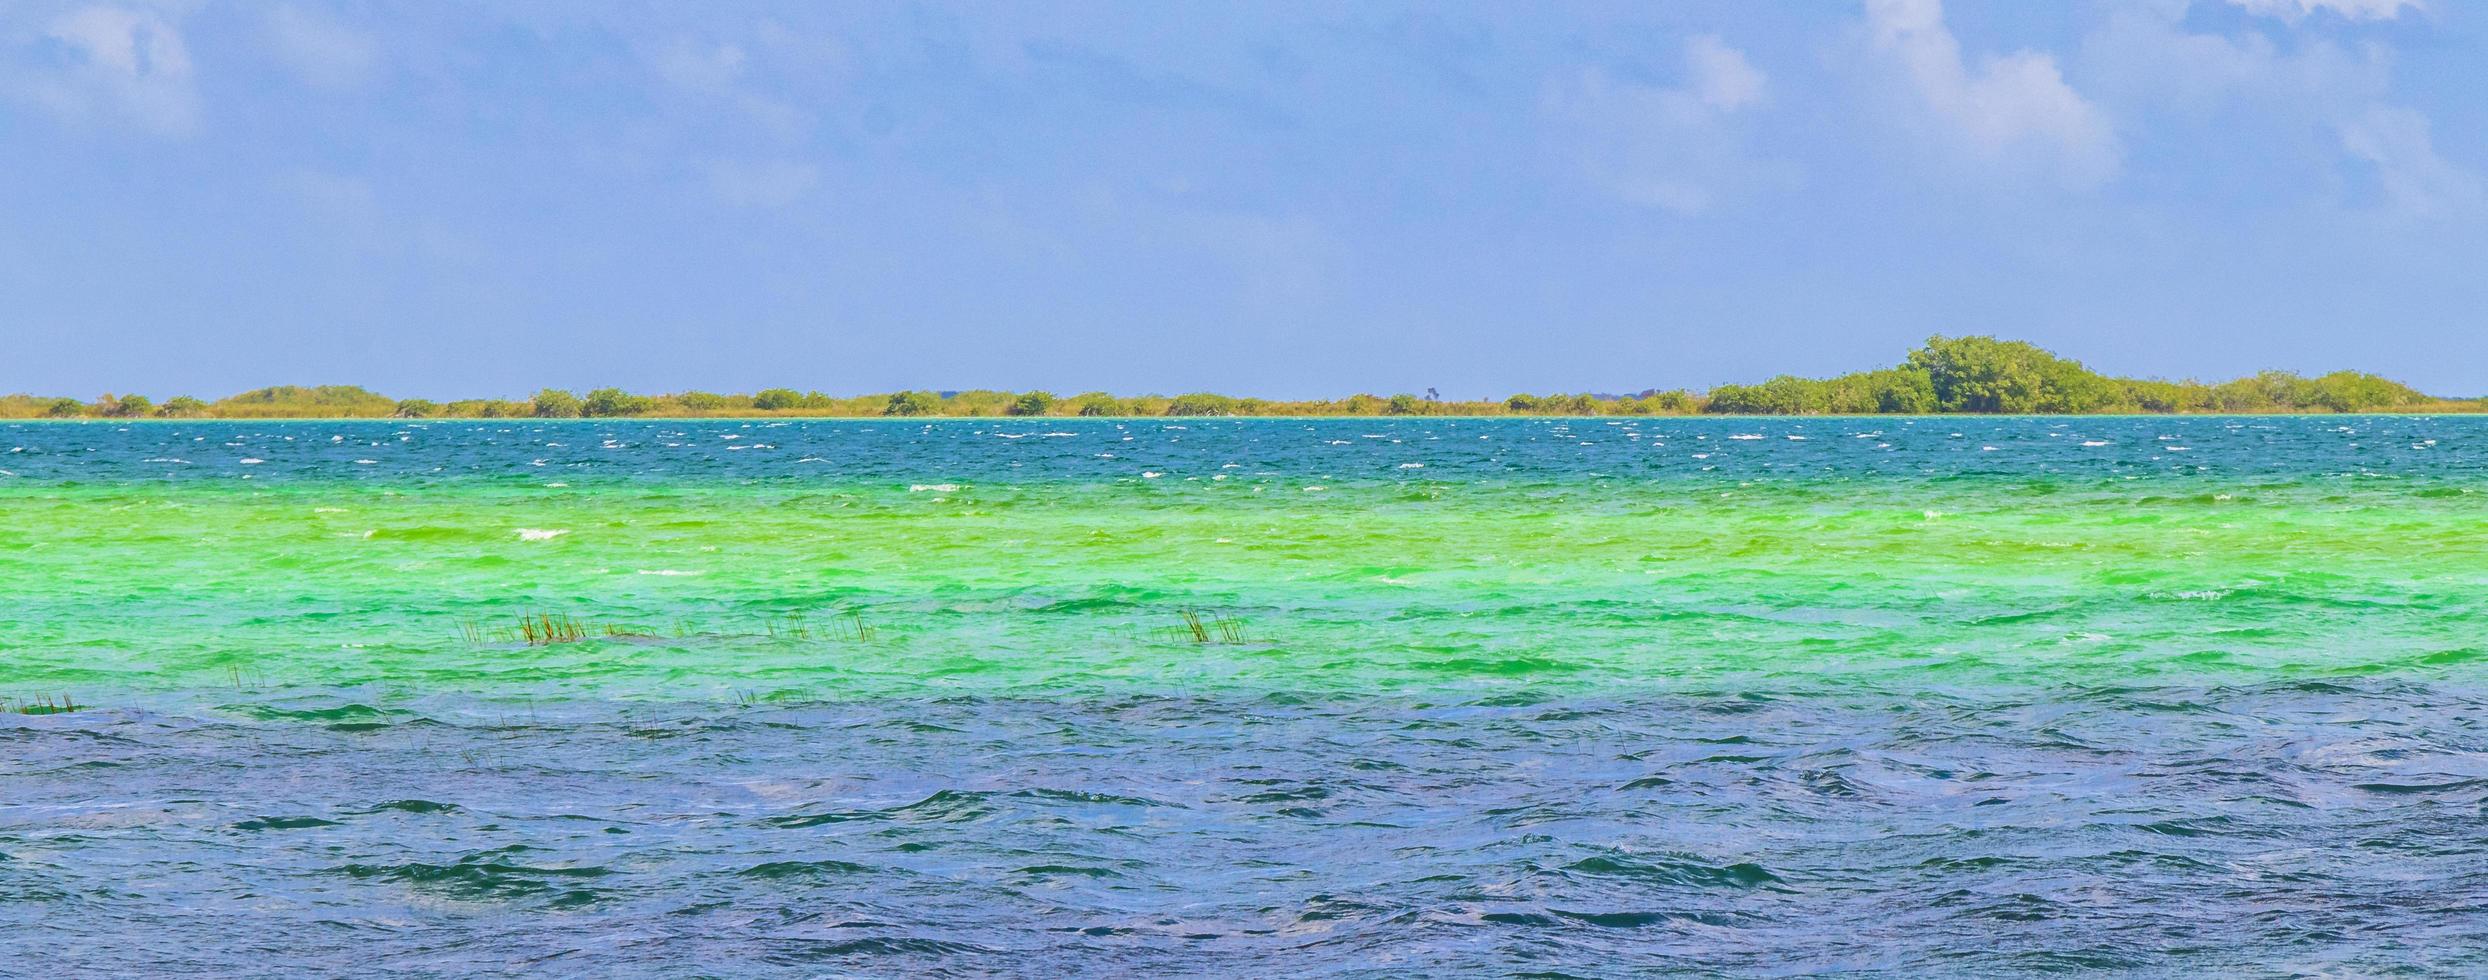 muyil lagon panorama vue paysage nature eau turquoise mexique. photo